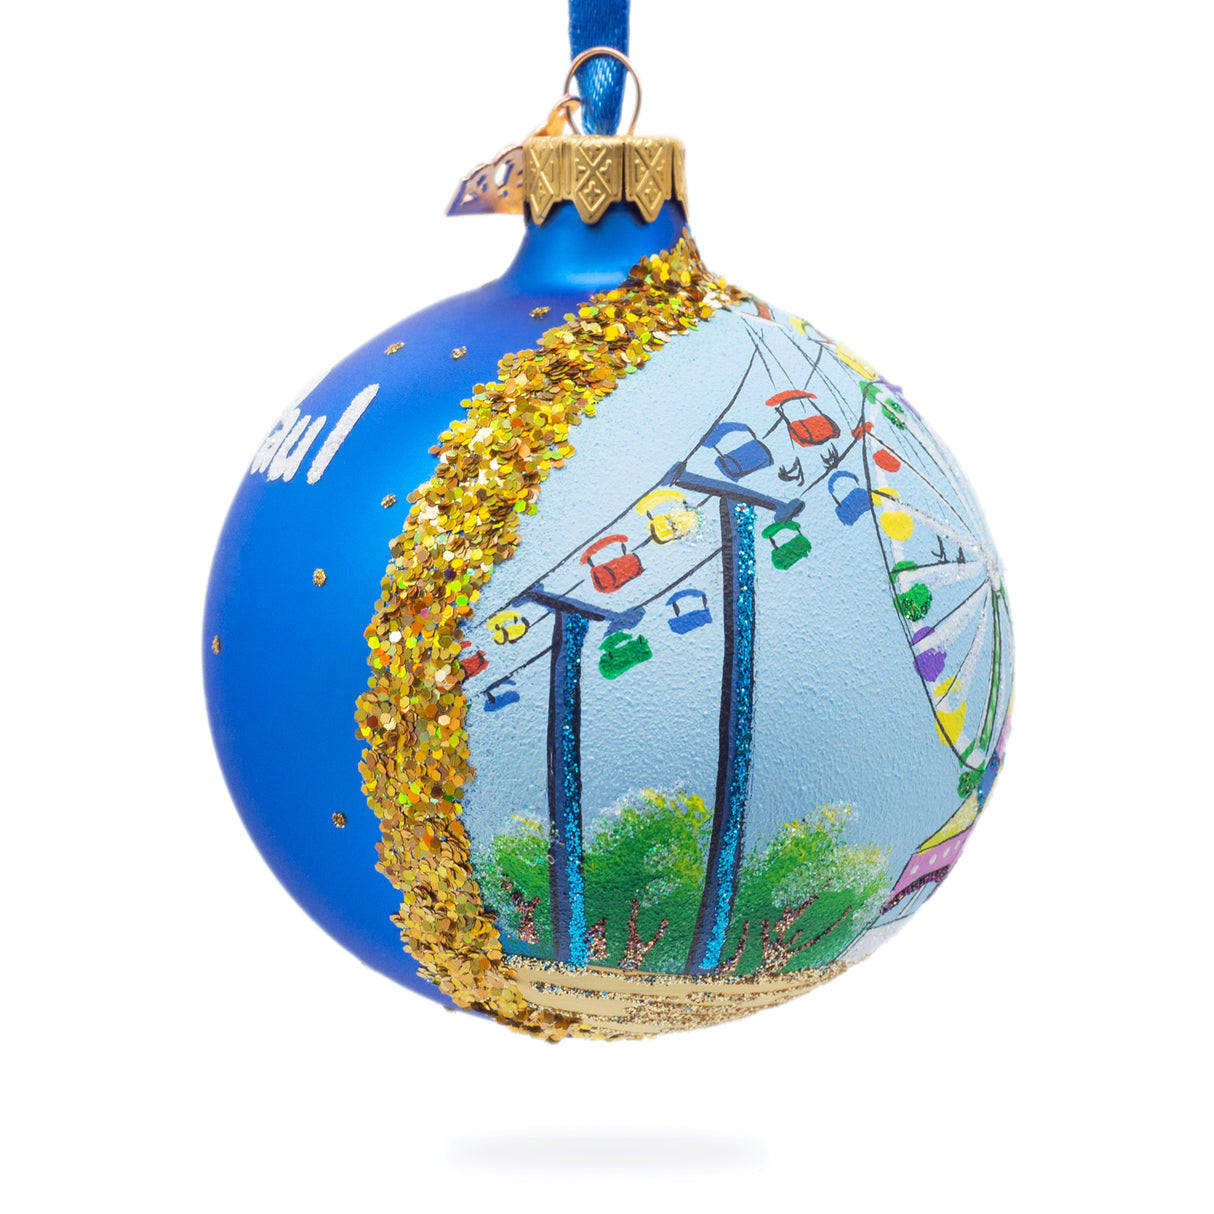 State Fair, St Paul, Minnesota, USA Glass Ball Christmas Ornament 3.25 InchesUkraine ,dimensions in inches: 3.25 x 3.25 x 3.25